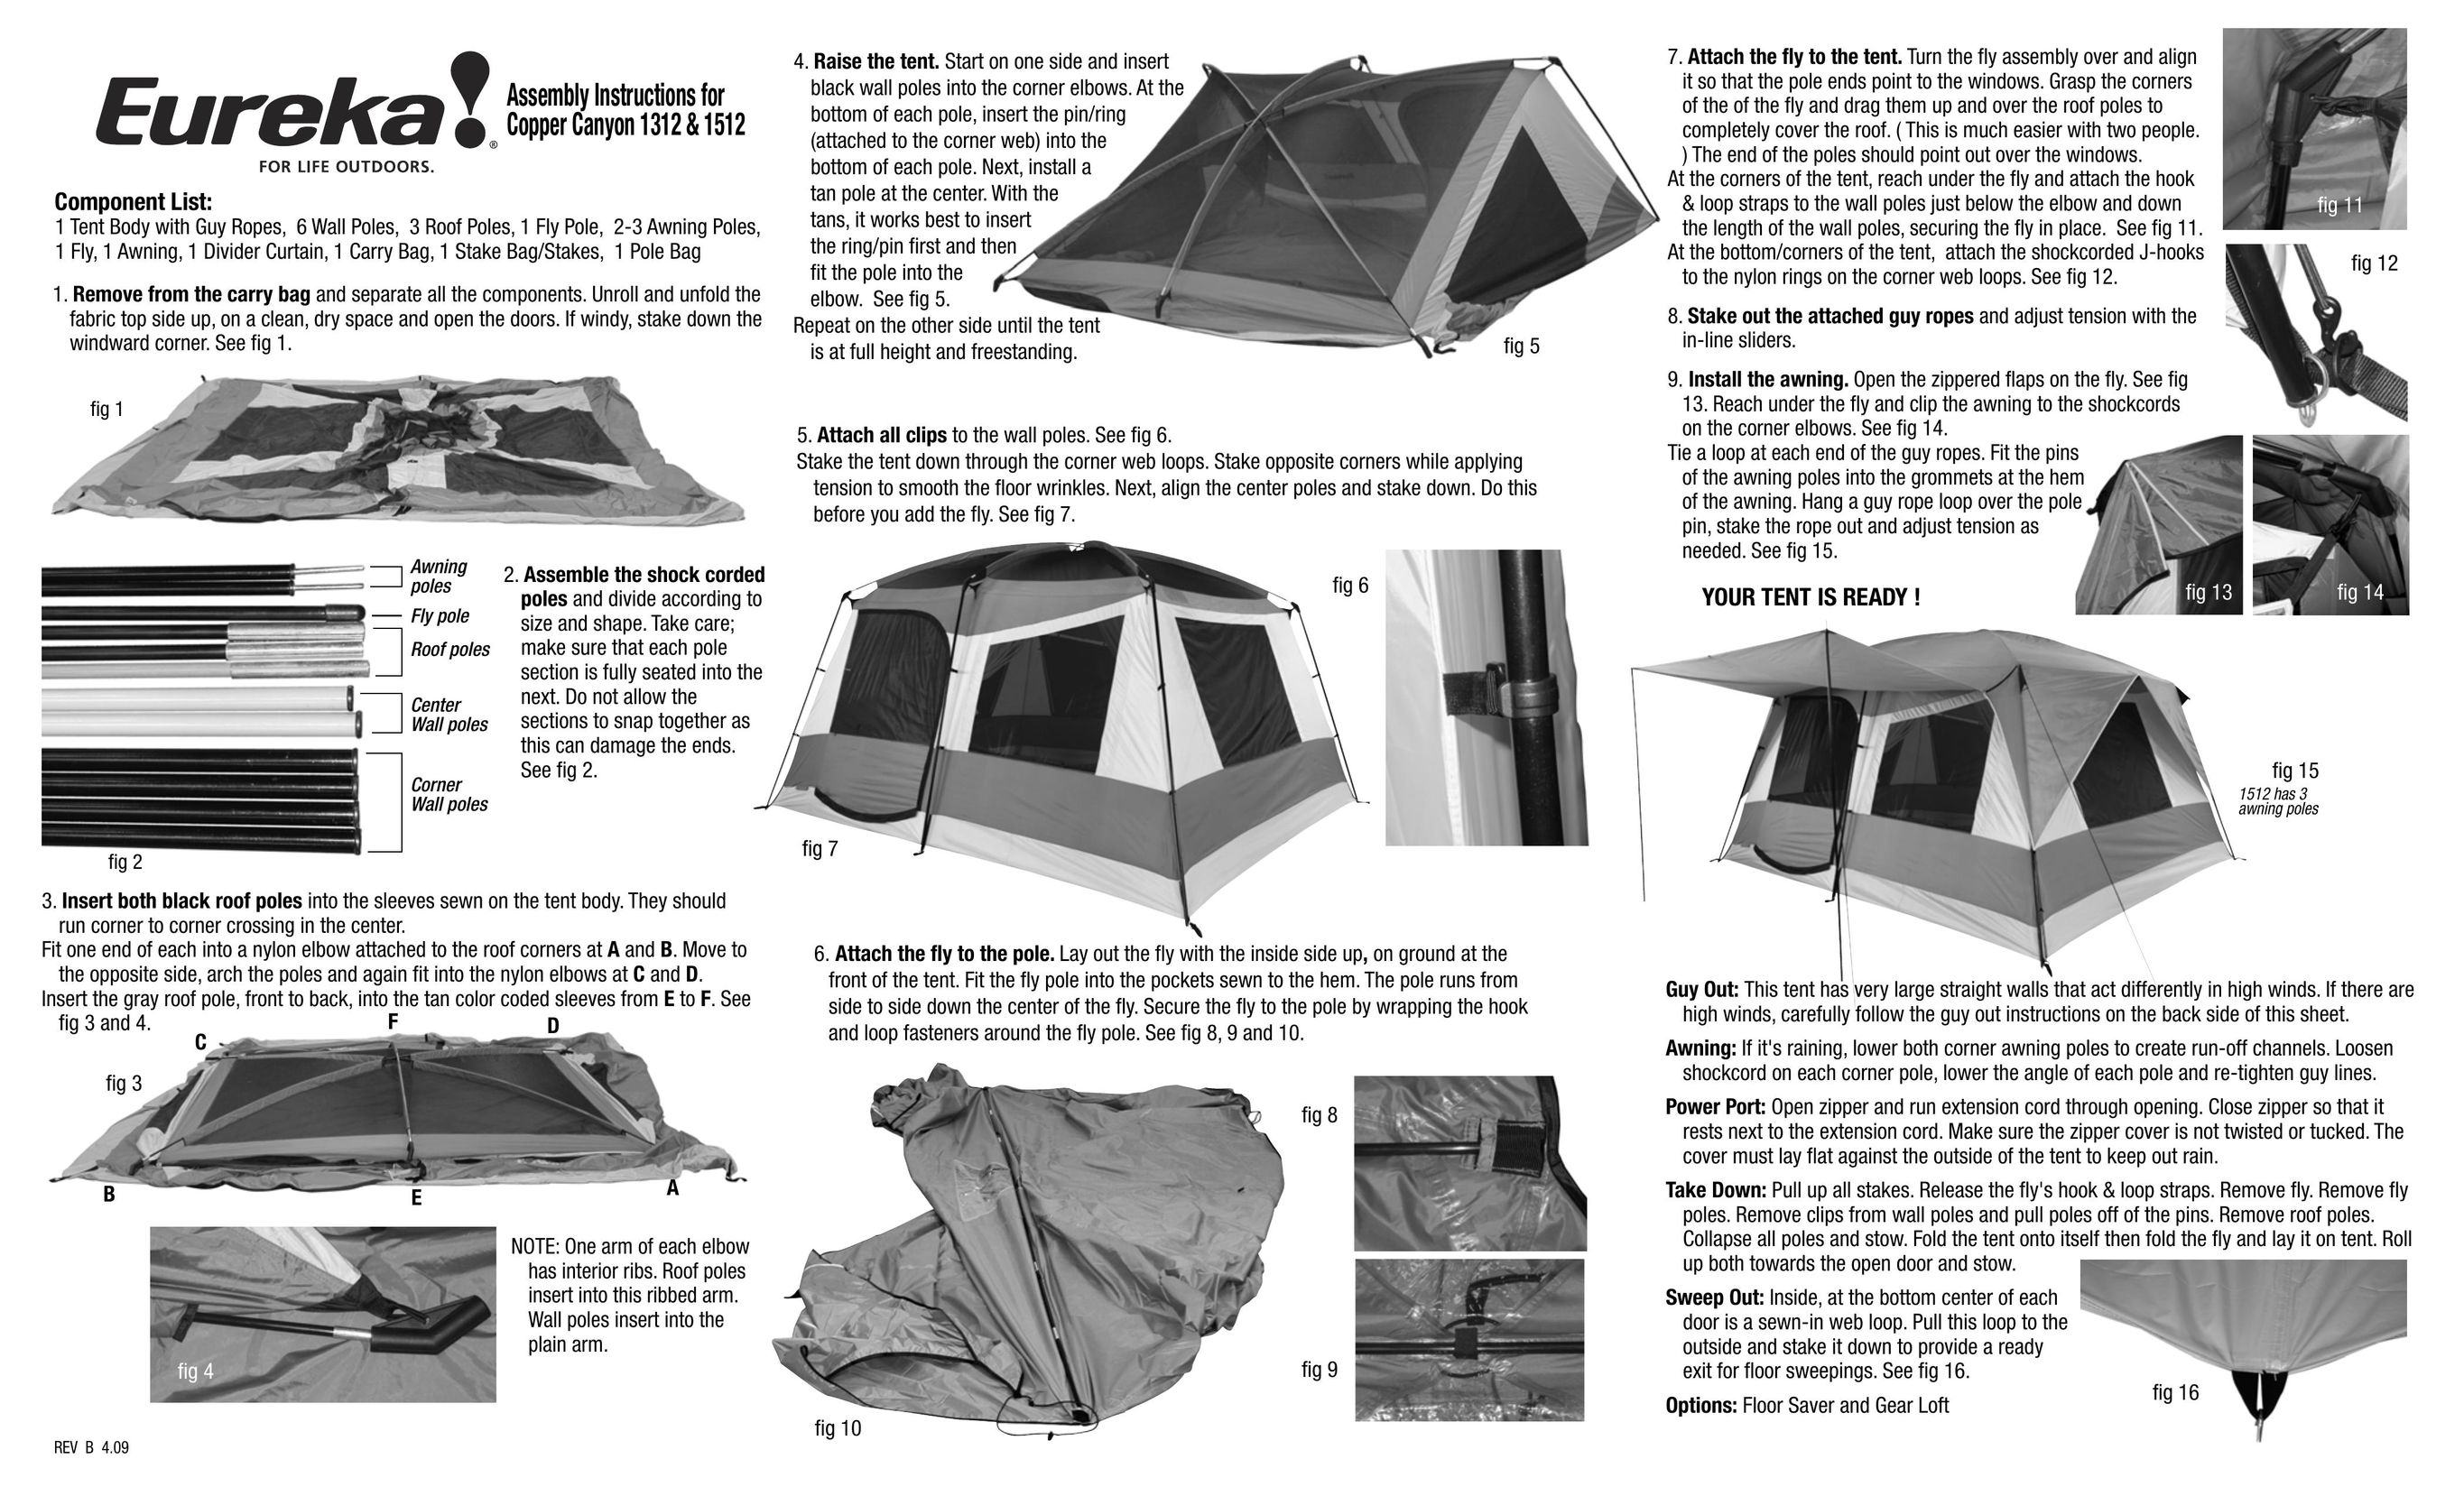 Eureka! Tents 1512 Tent User Manual